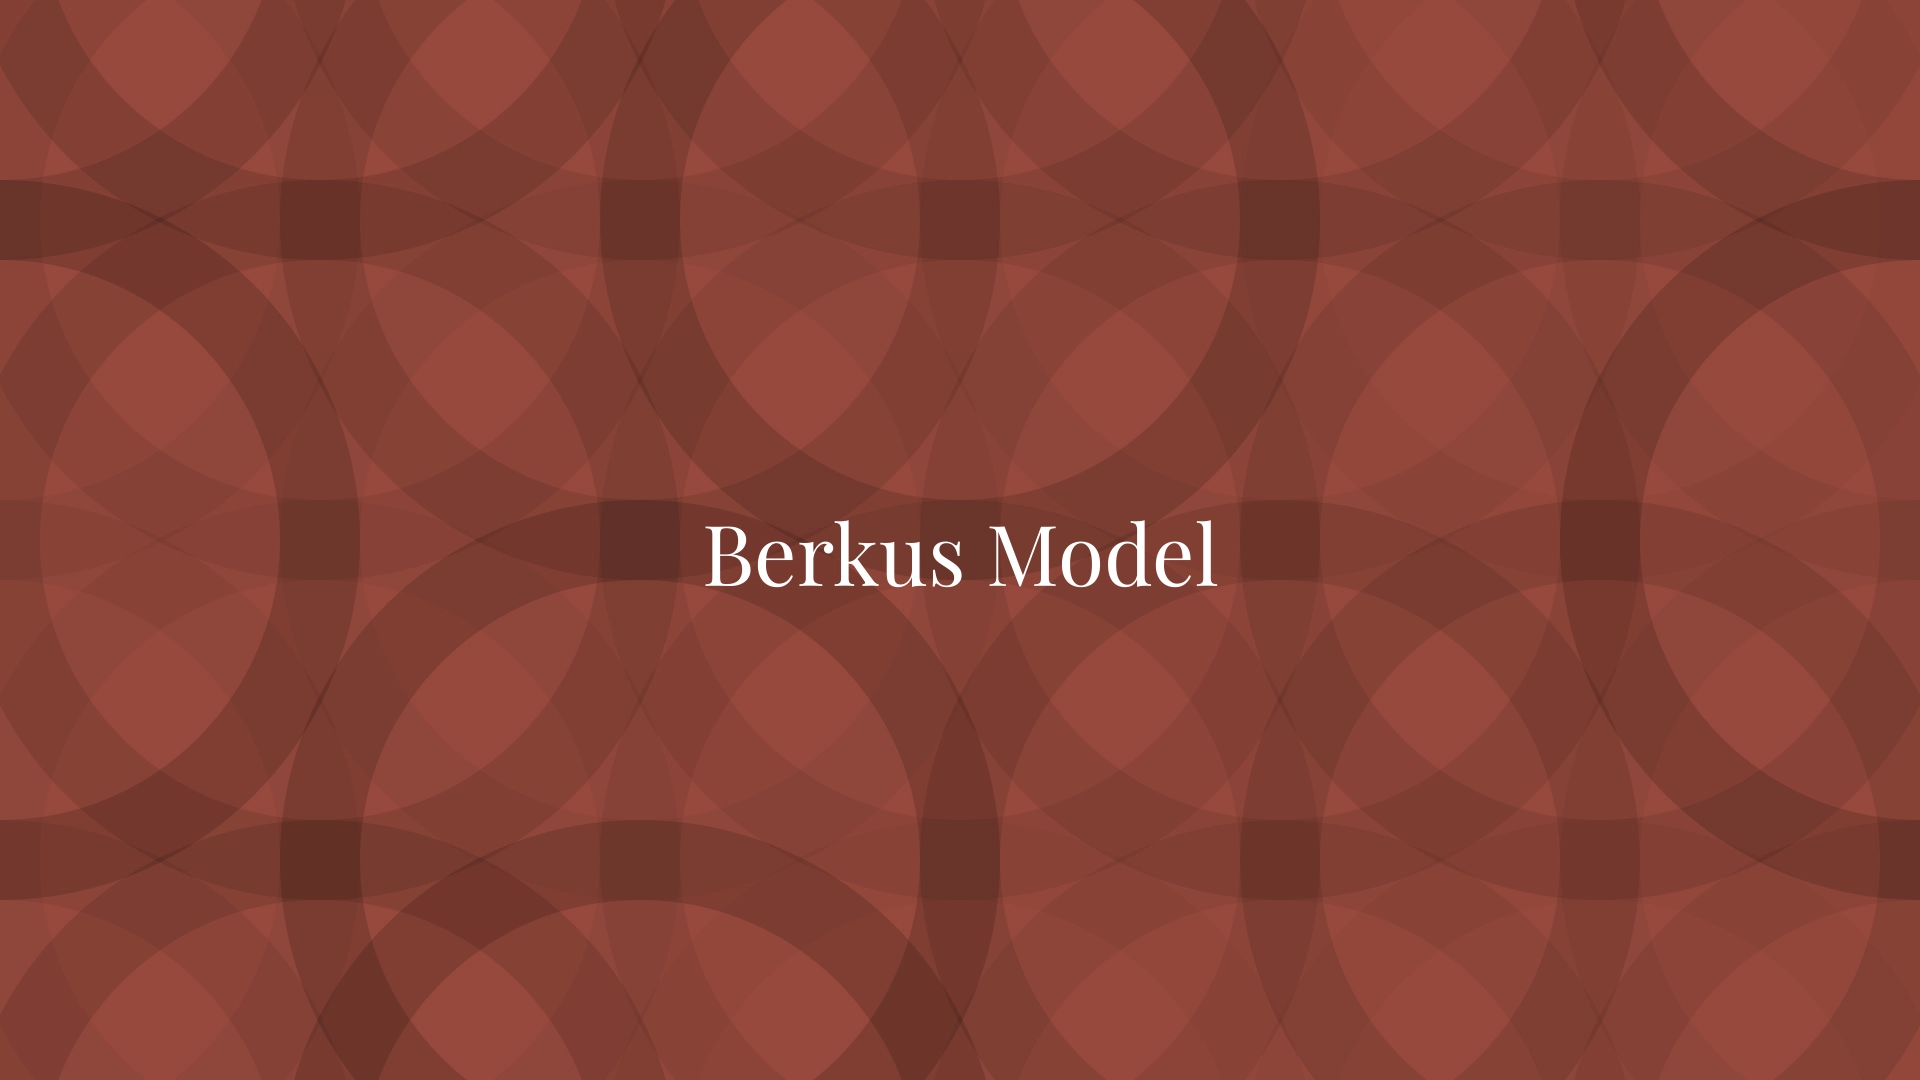 Berkus Model